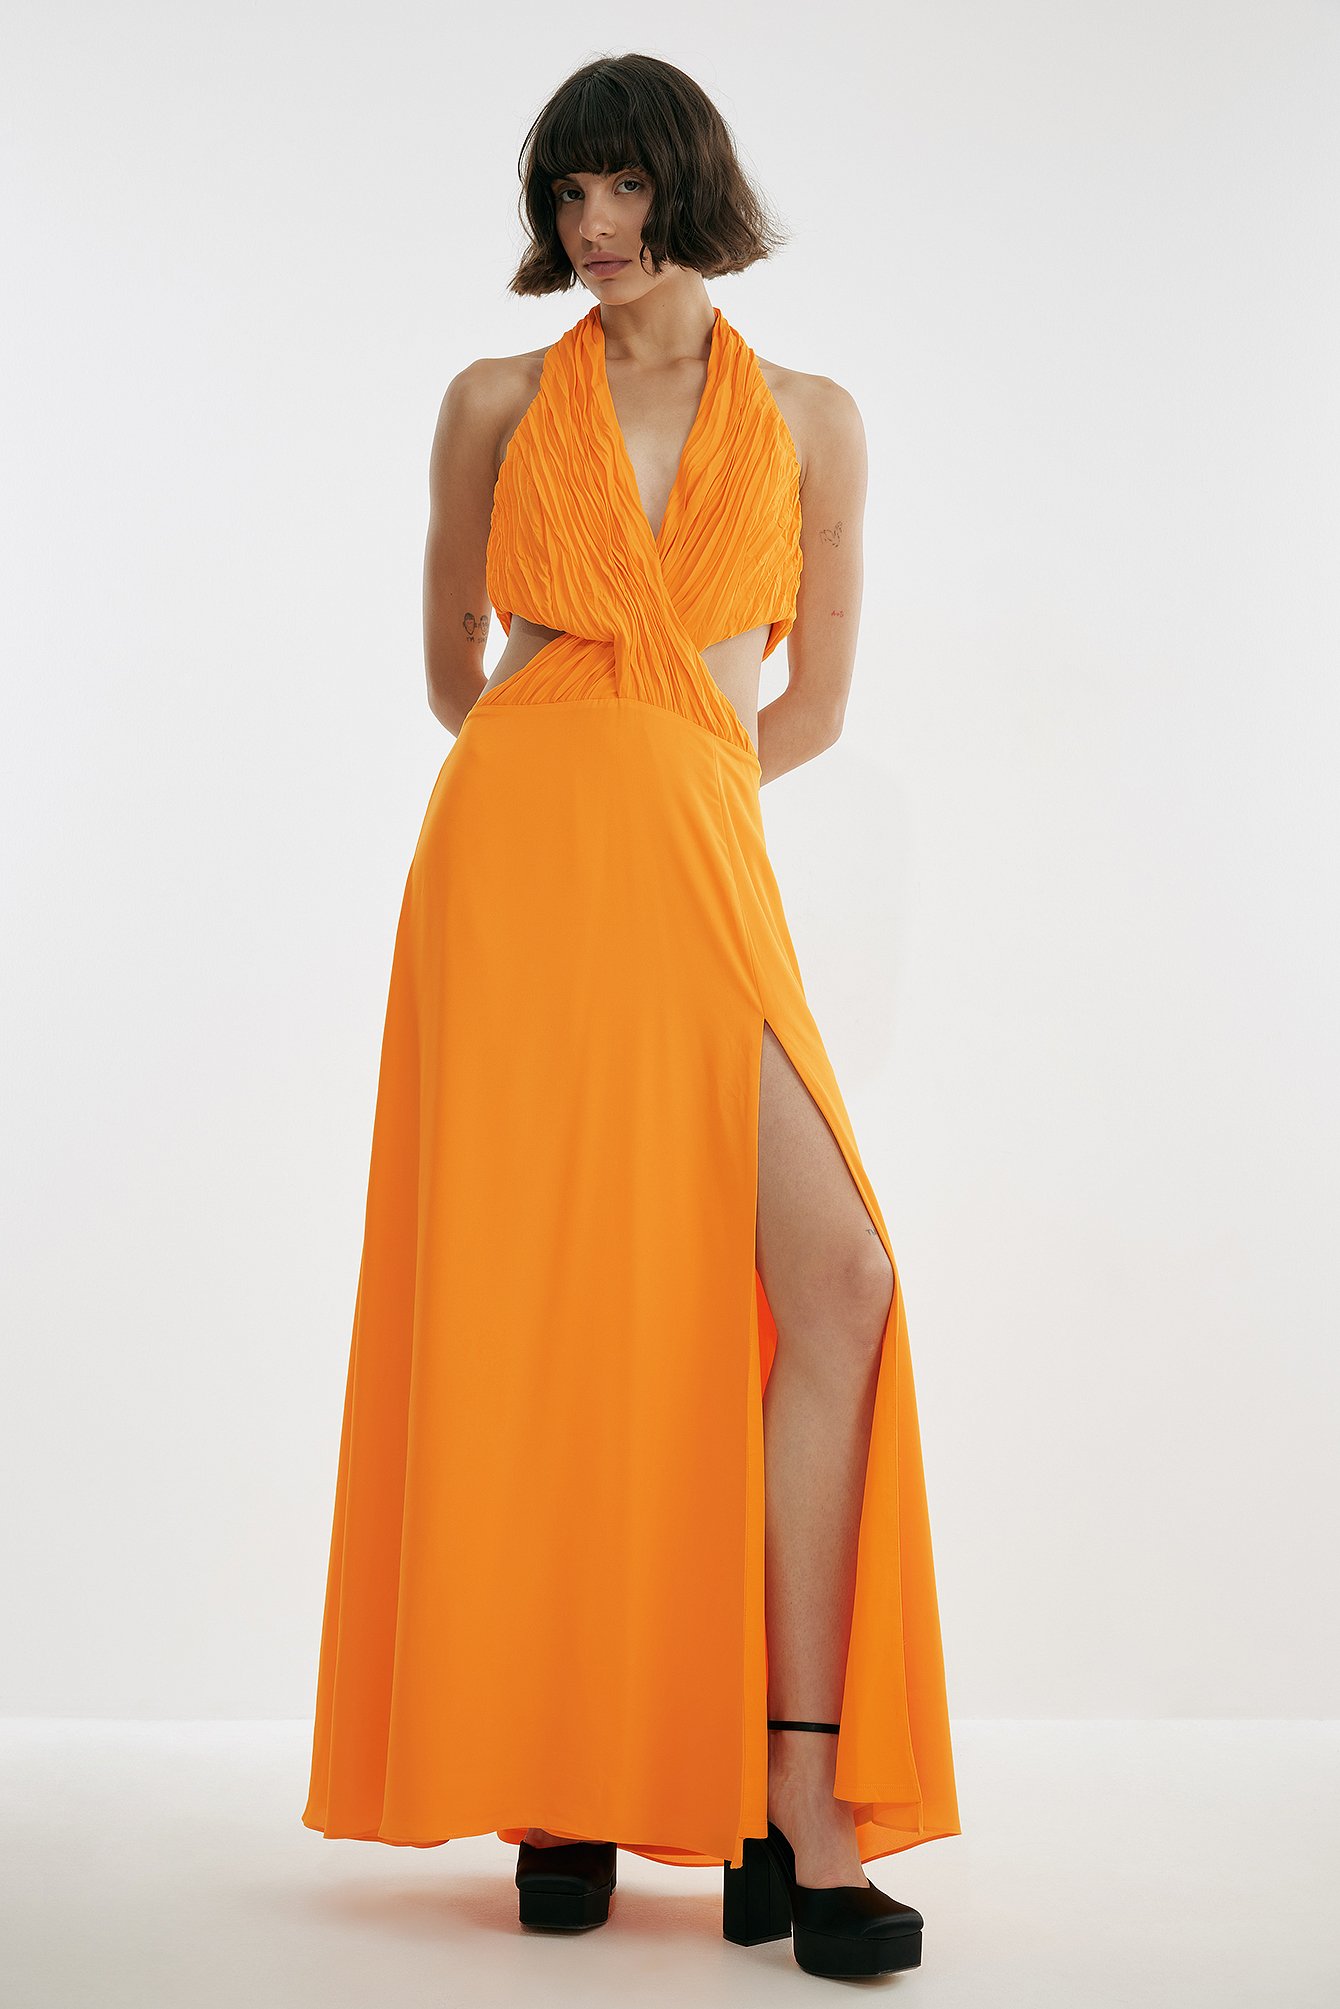 Warm Orange Flowy Maxi Halterneck Dress